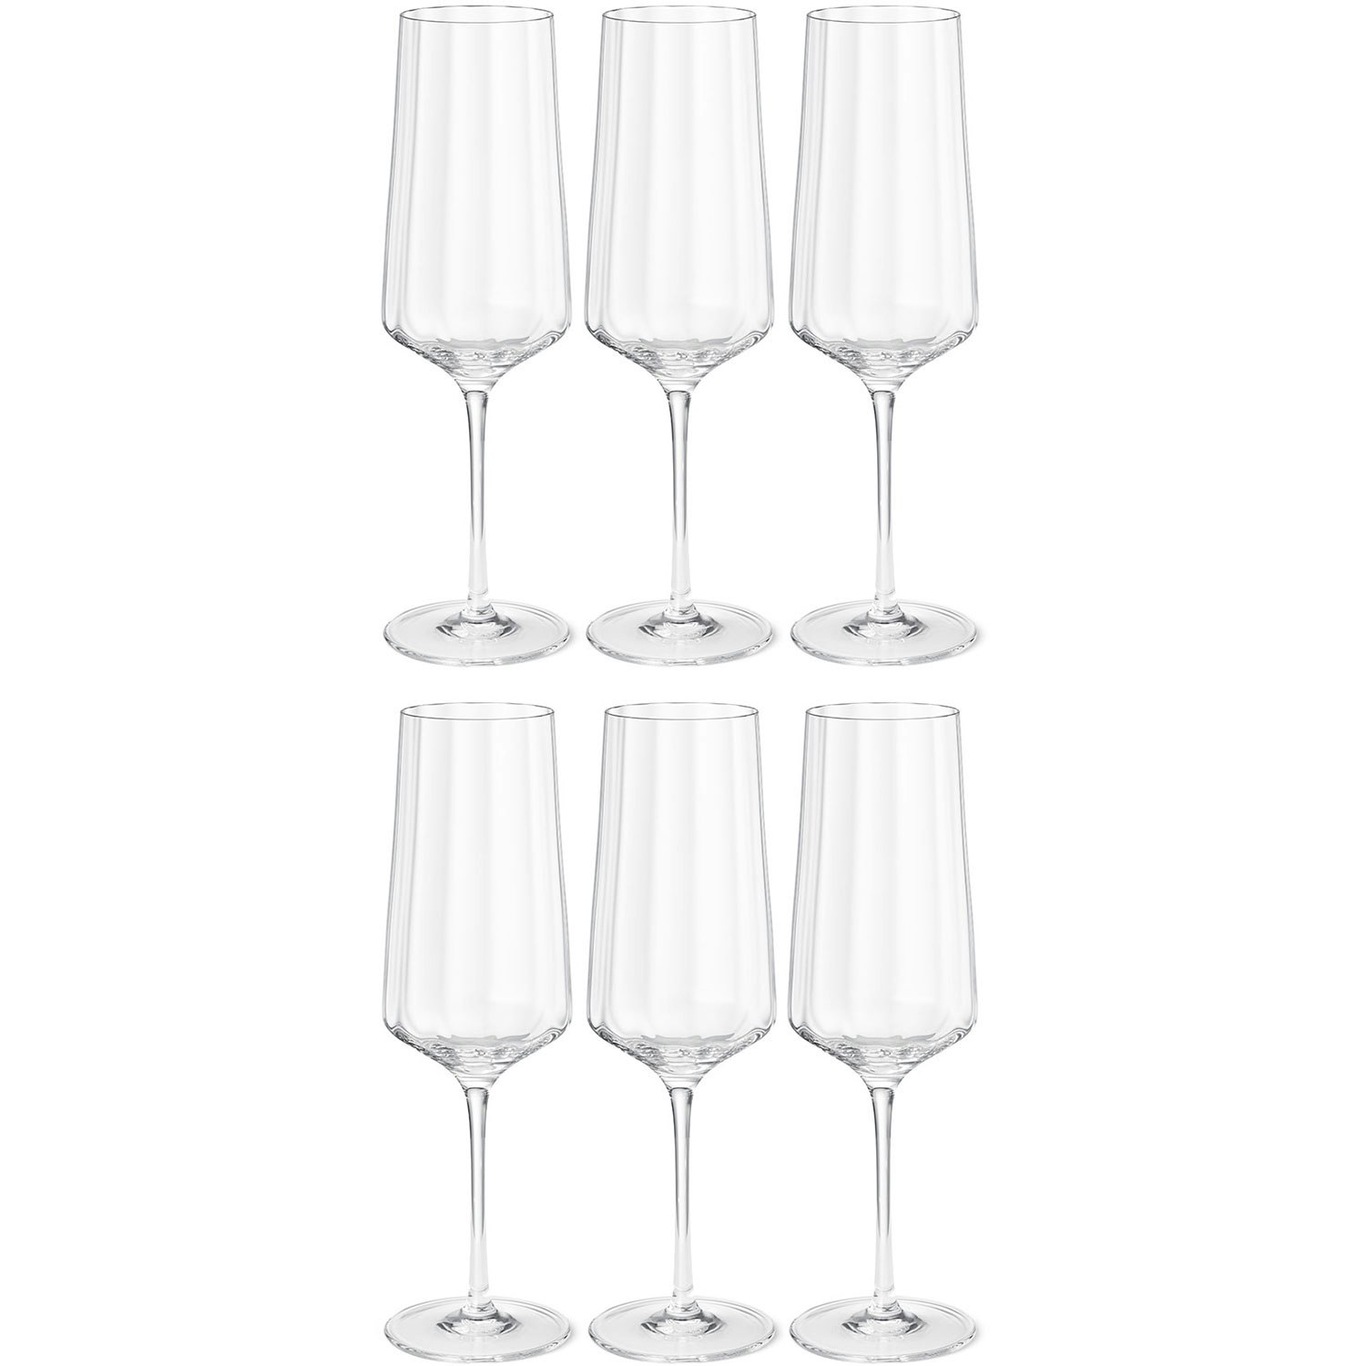 https://royaldesign.com/image/2/georg-jensen-bernadotte-champagne-flute-glass-xln-27-cl-6-pcs-2?w=800&quality=80